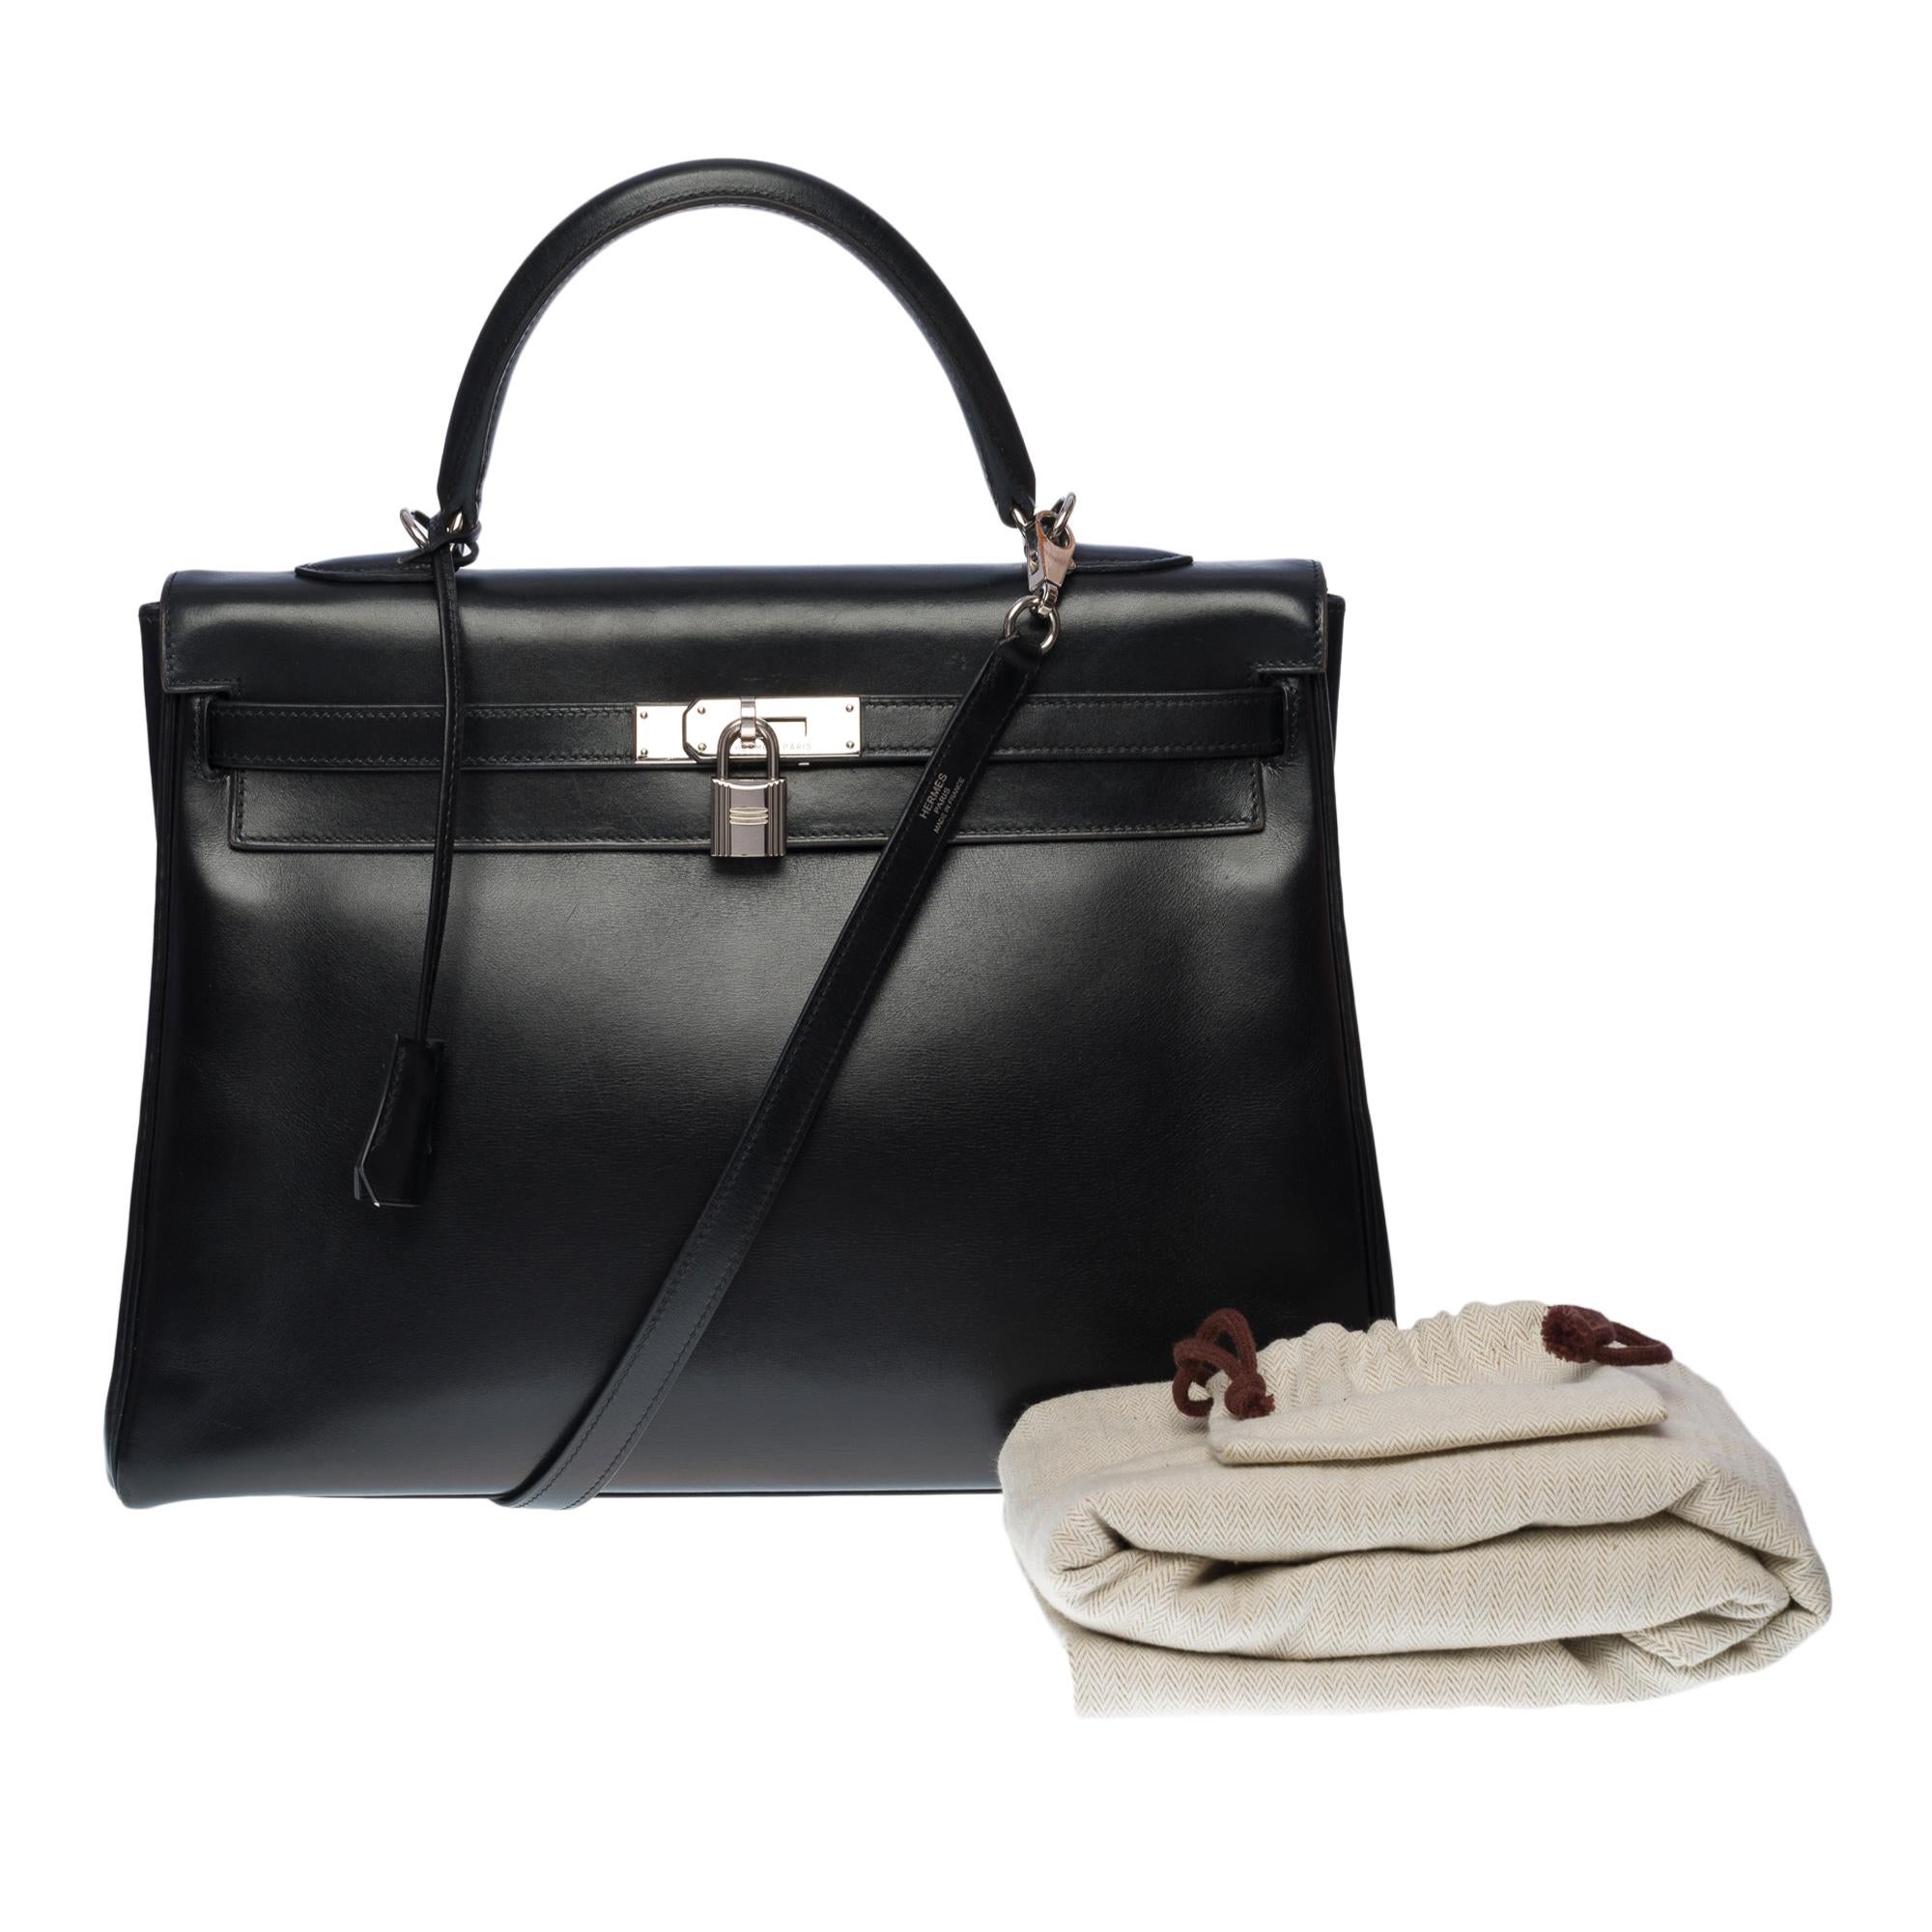 Rare Hermès Kelly 35 retourné handbag strap in Black Calf leather, SHW 7